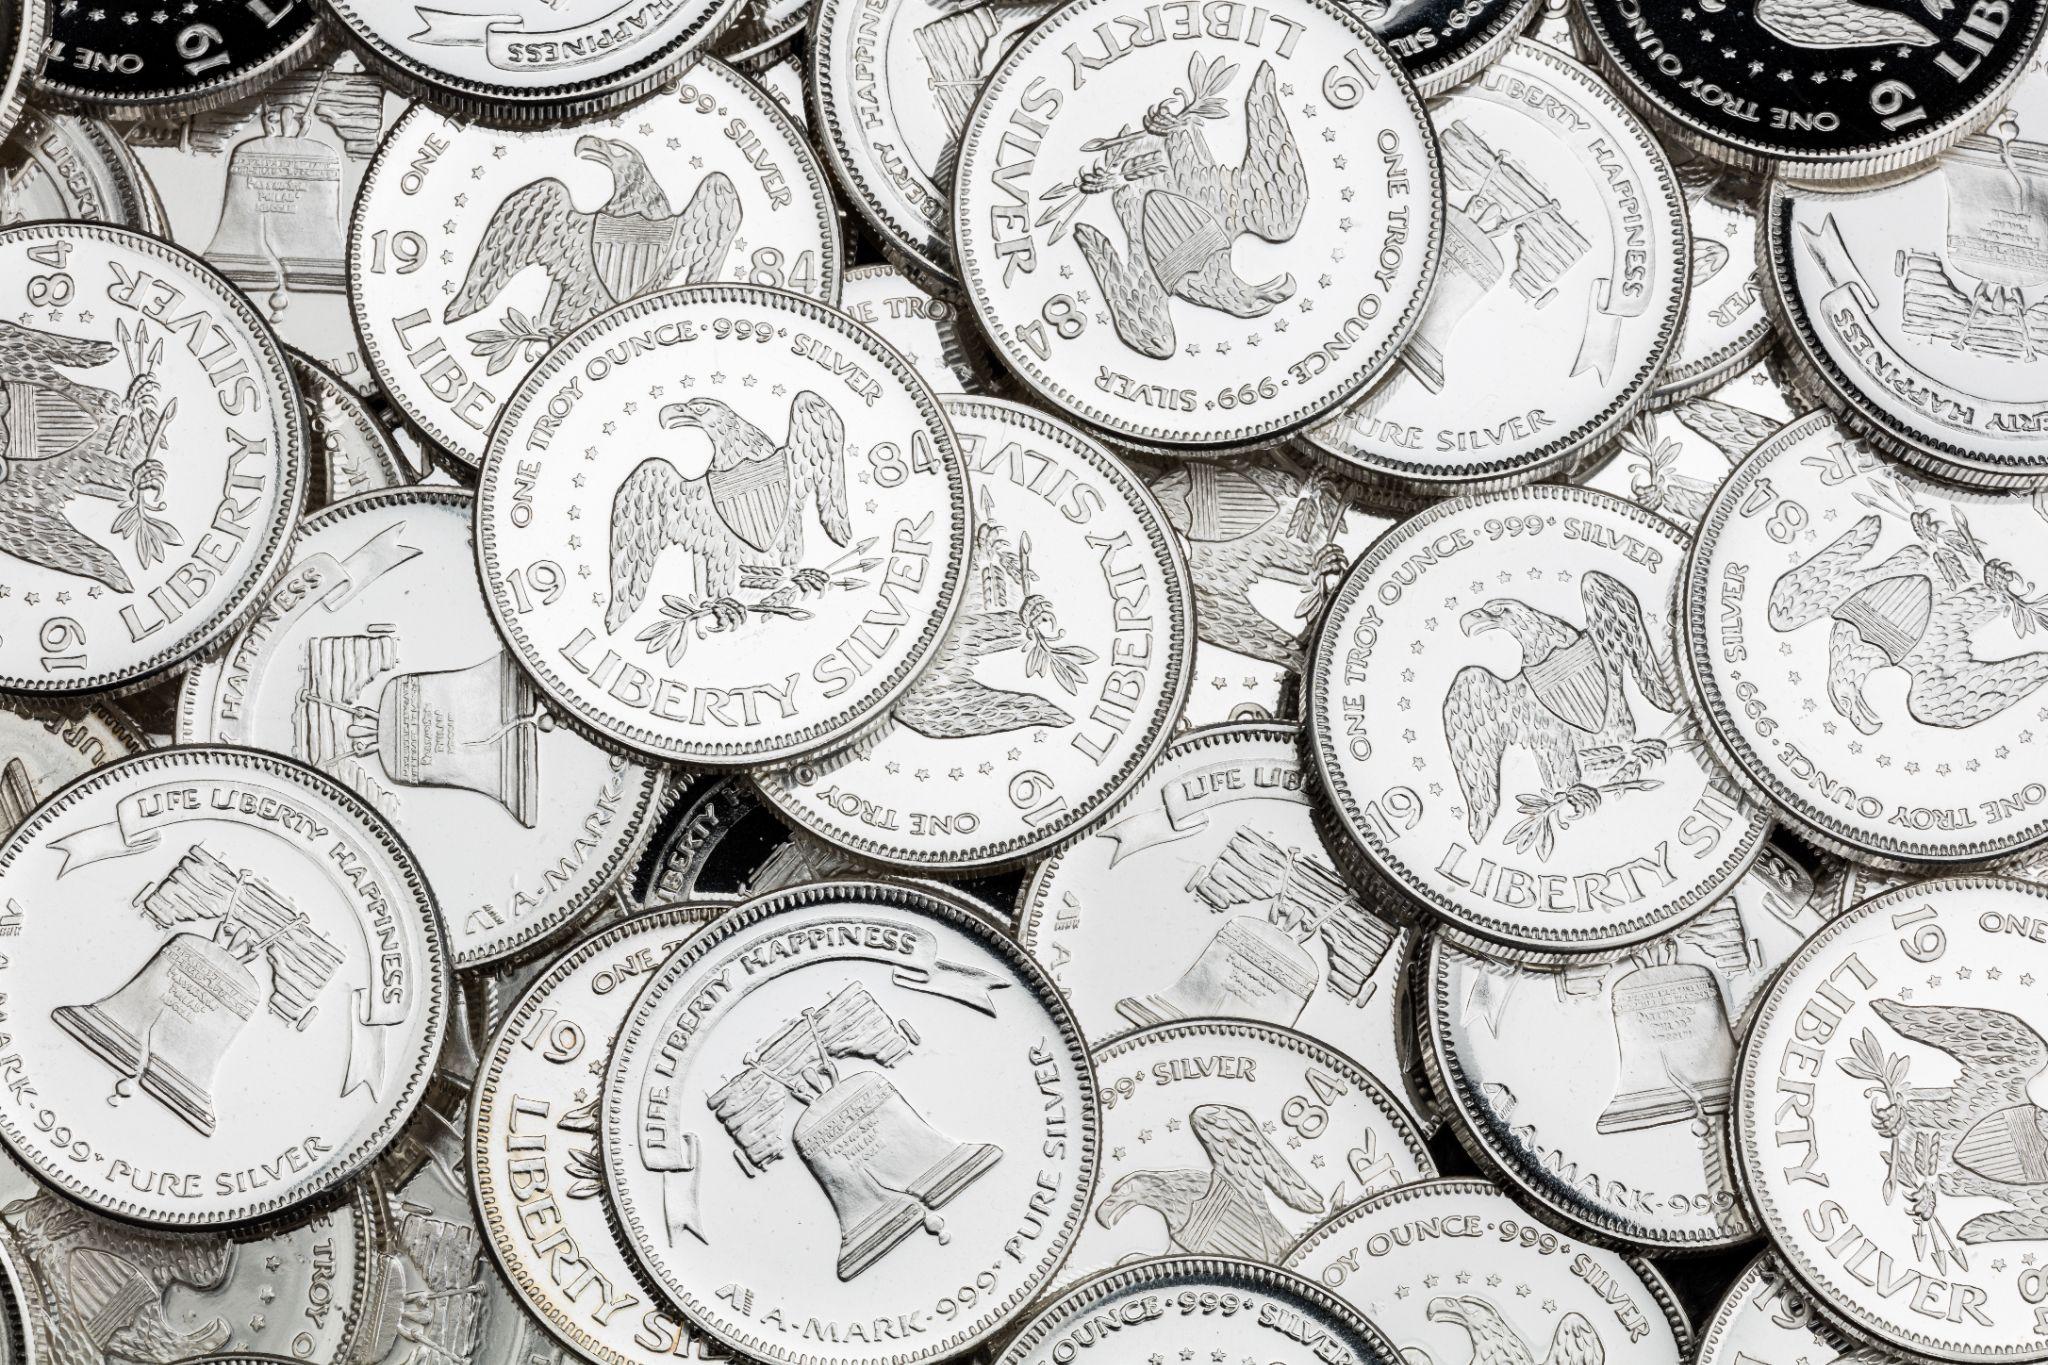 American silver eagle coins.